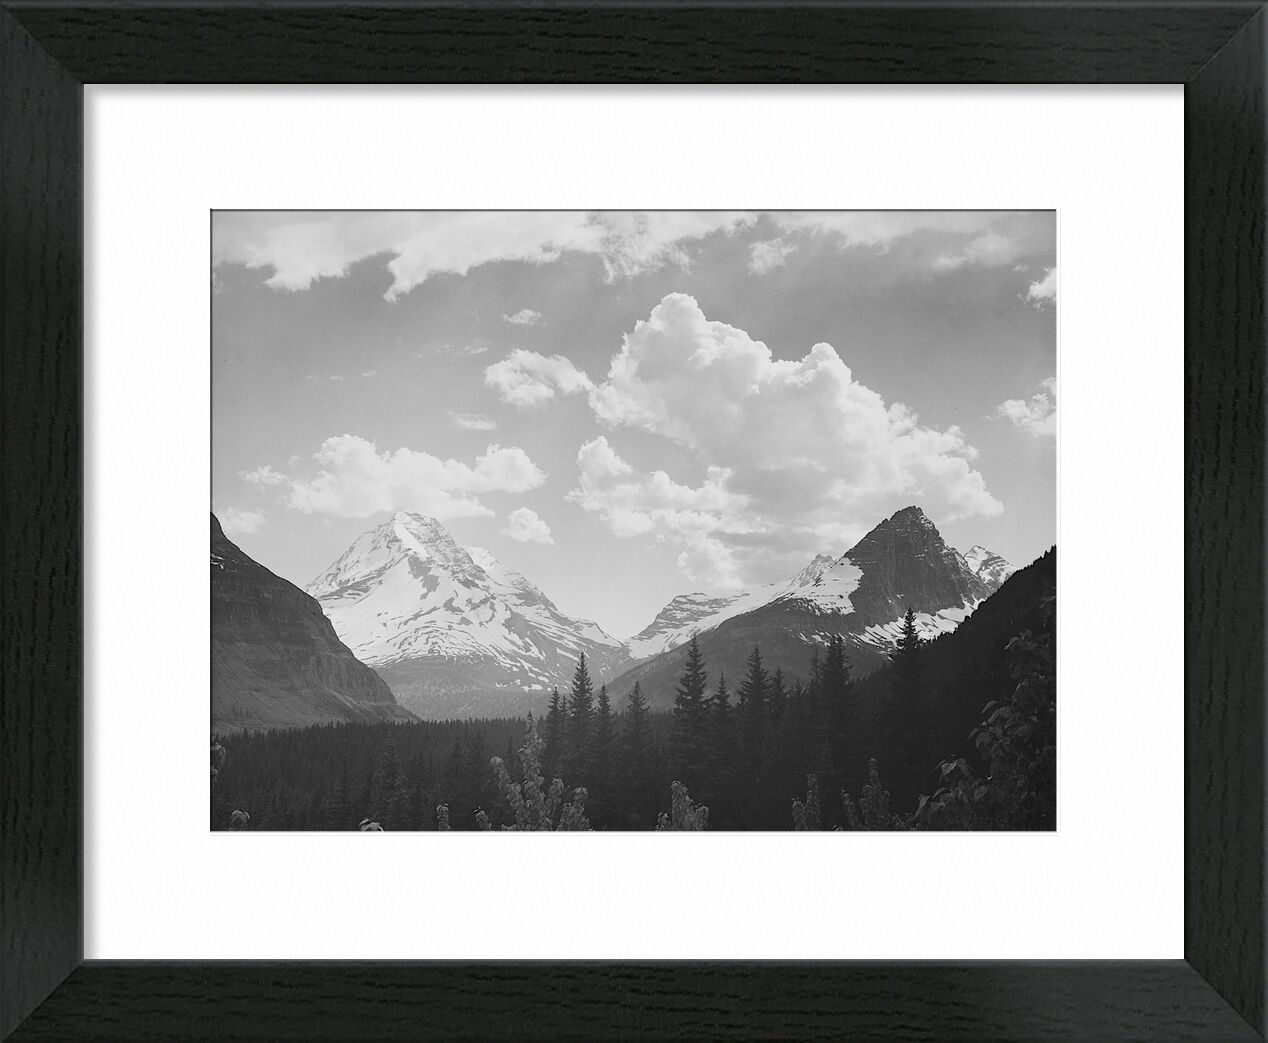 Looking Across Forest To Mountains And Clouds - Ansel Adams desde Bellas artes, Prodi Art, montaje, nube, paisaje, blanco y negro, nieve, invierno, abeto